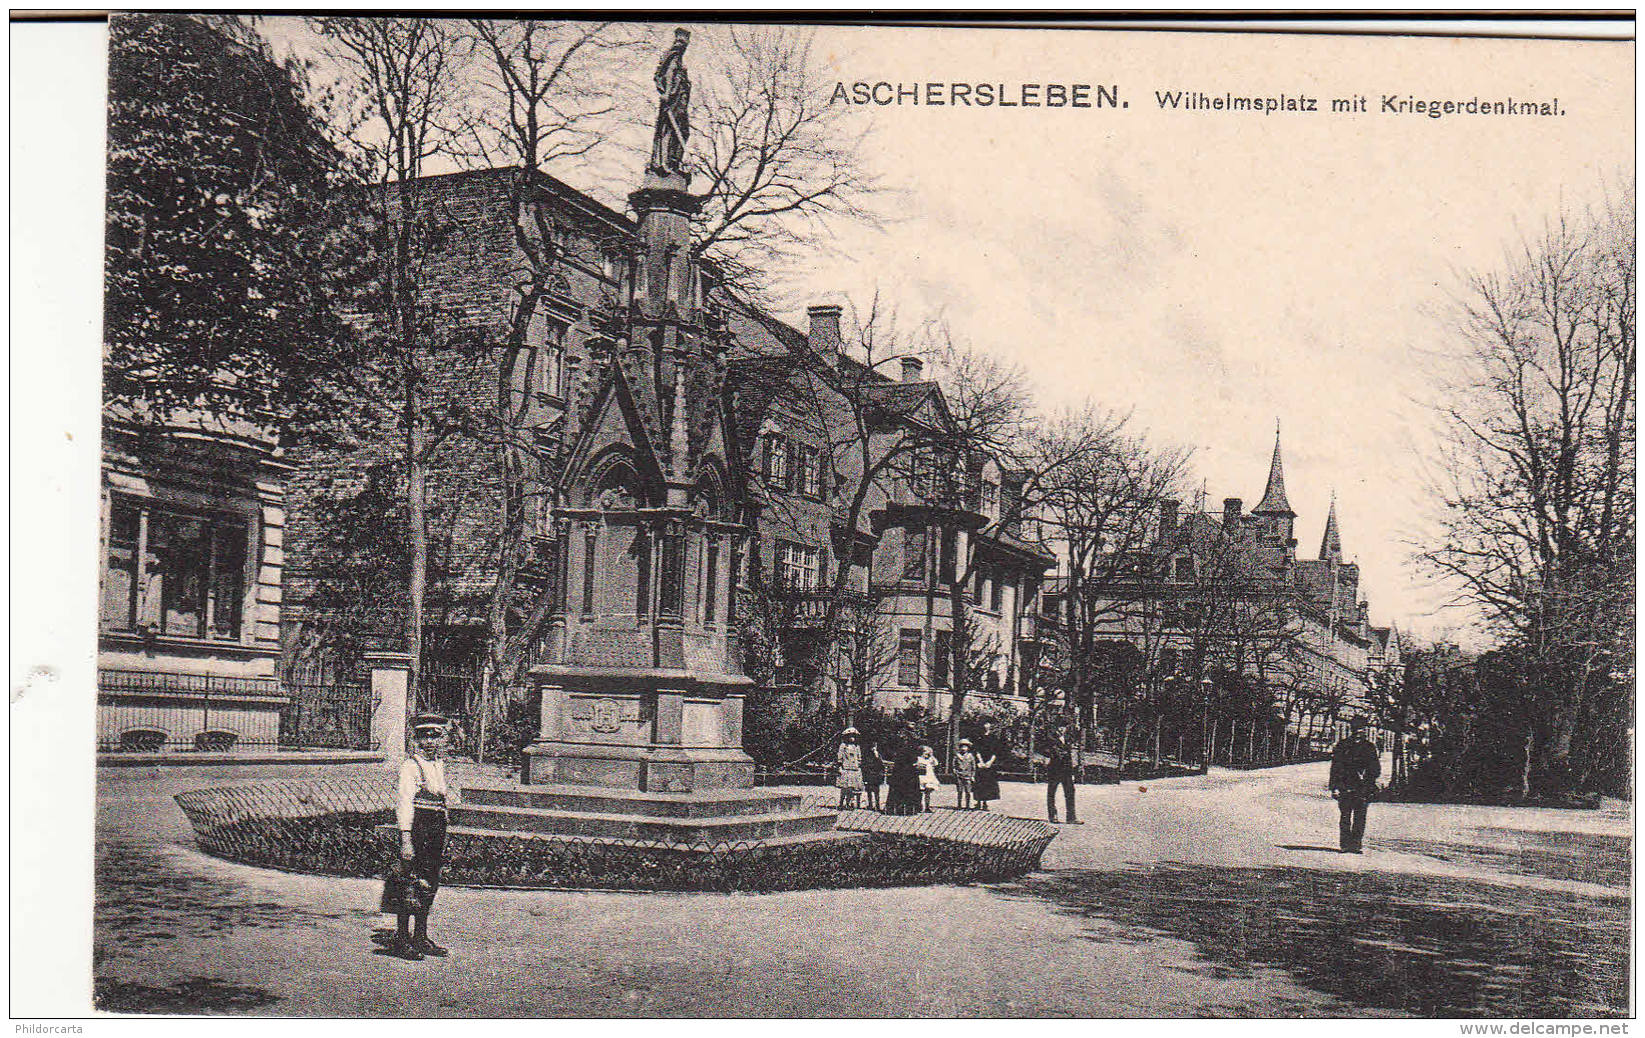 Aschersleben - Aschersleben